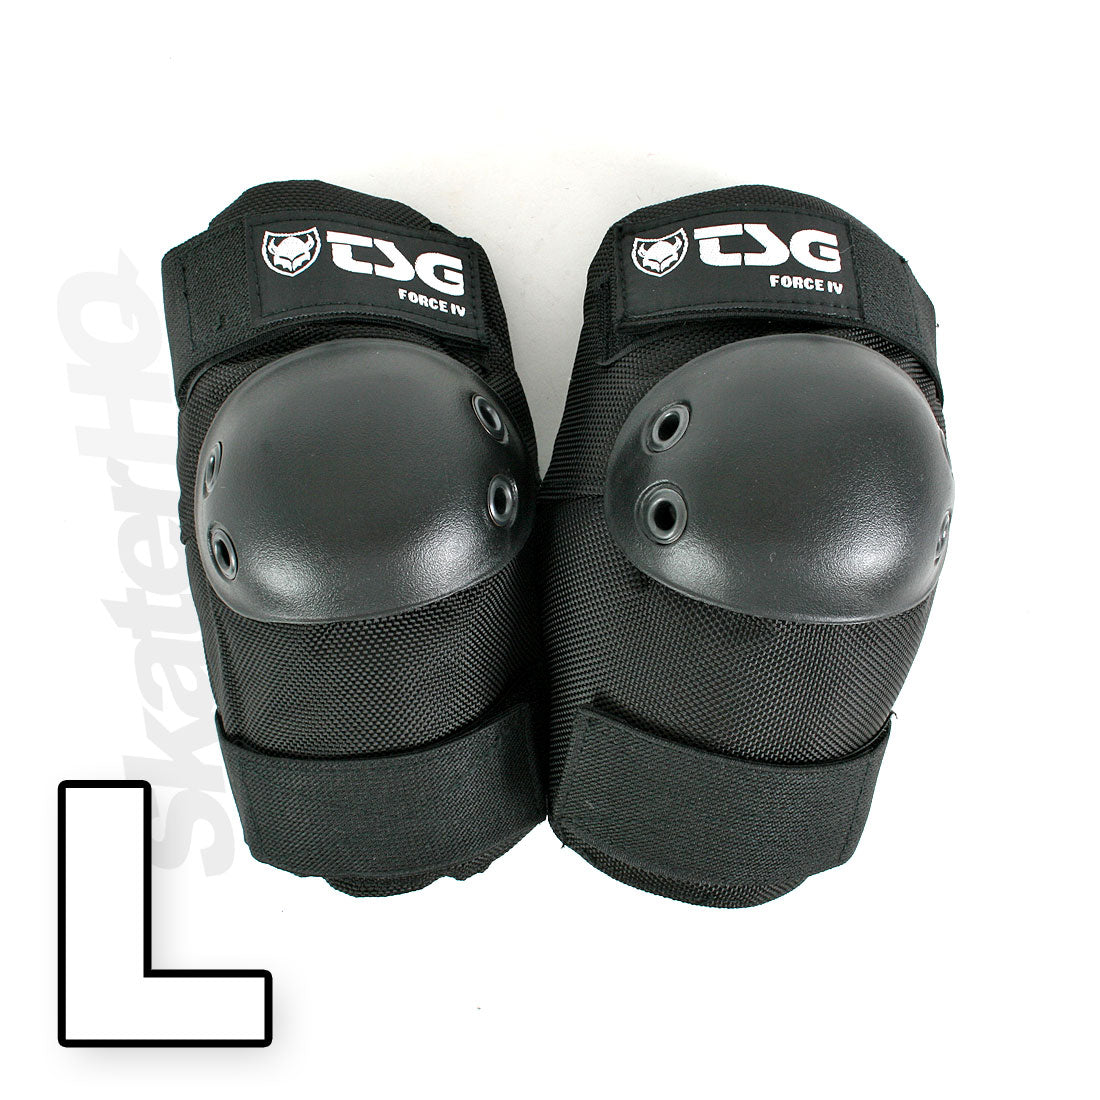 TSG Force IV Elbow Pad Black L Protective Gear